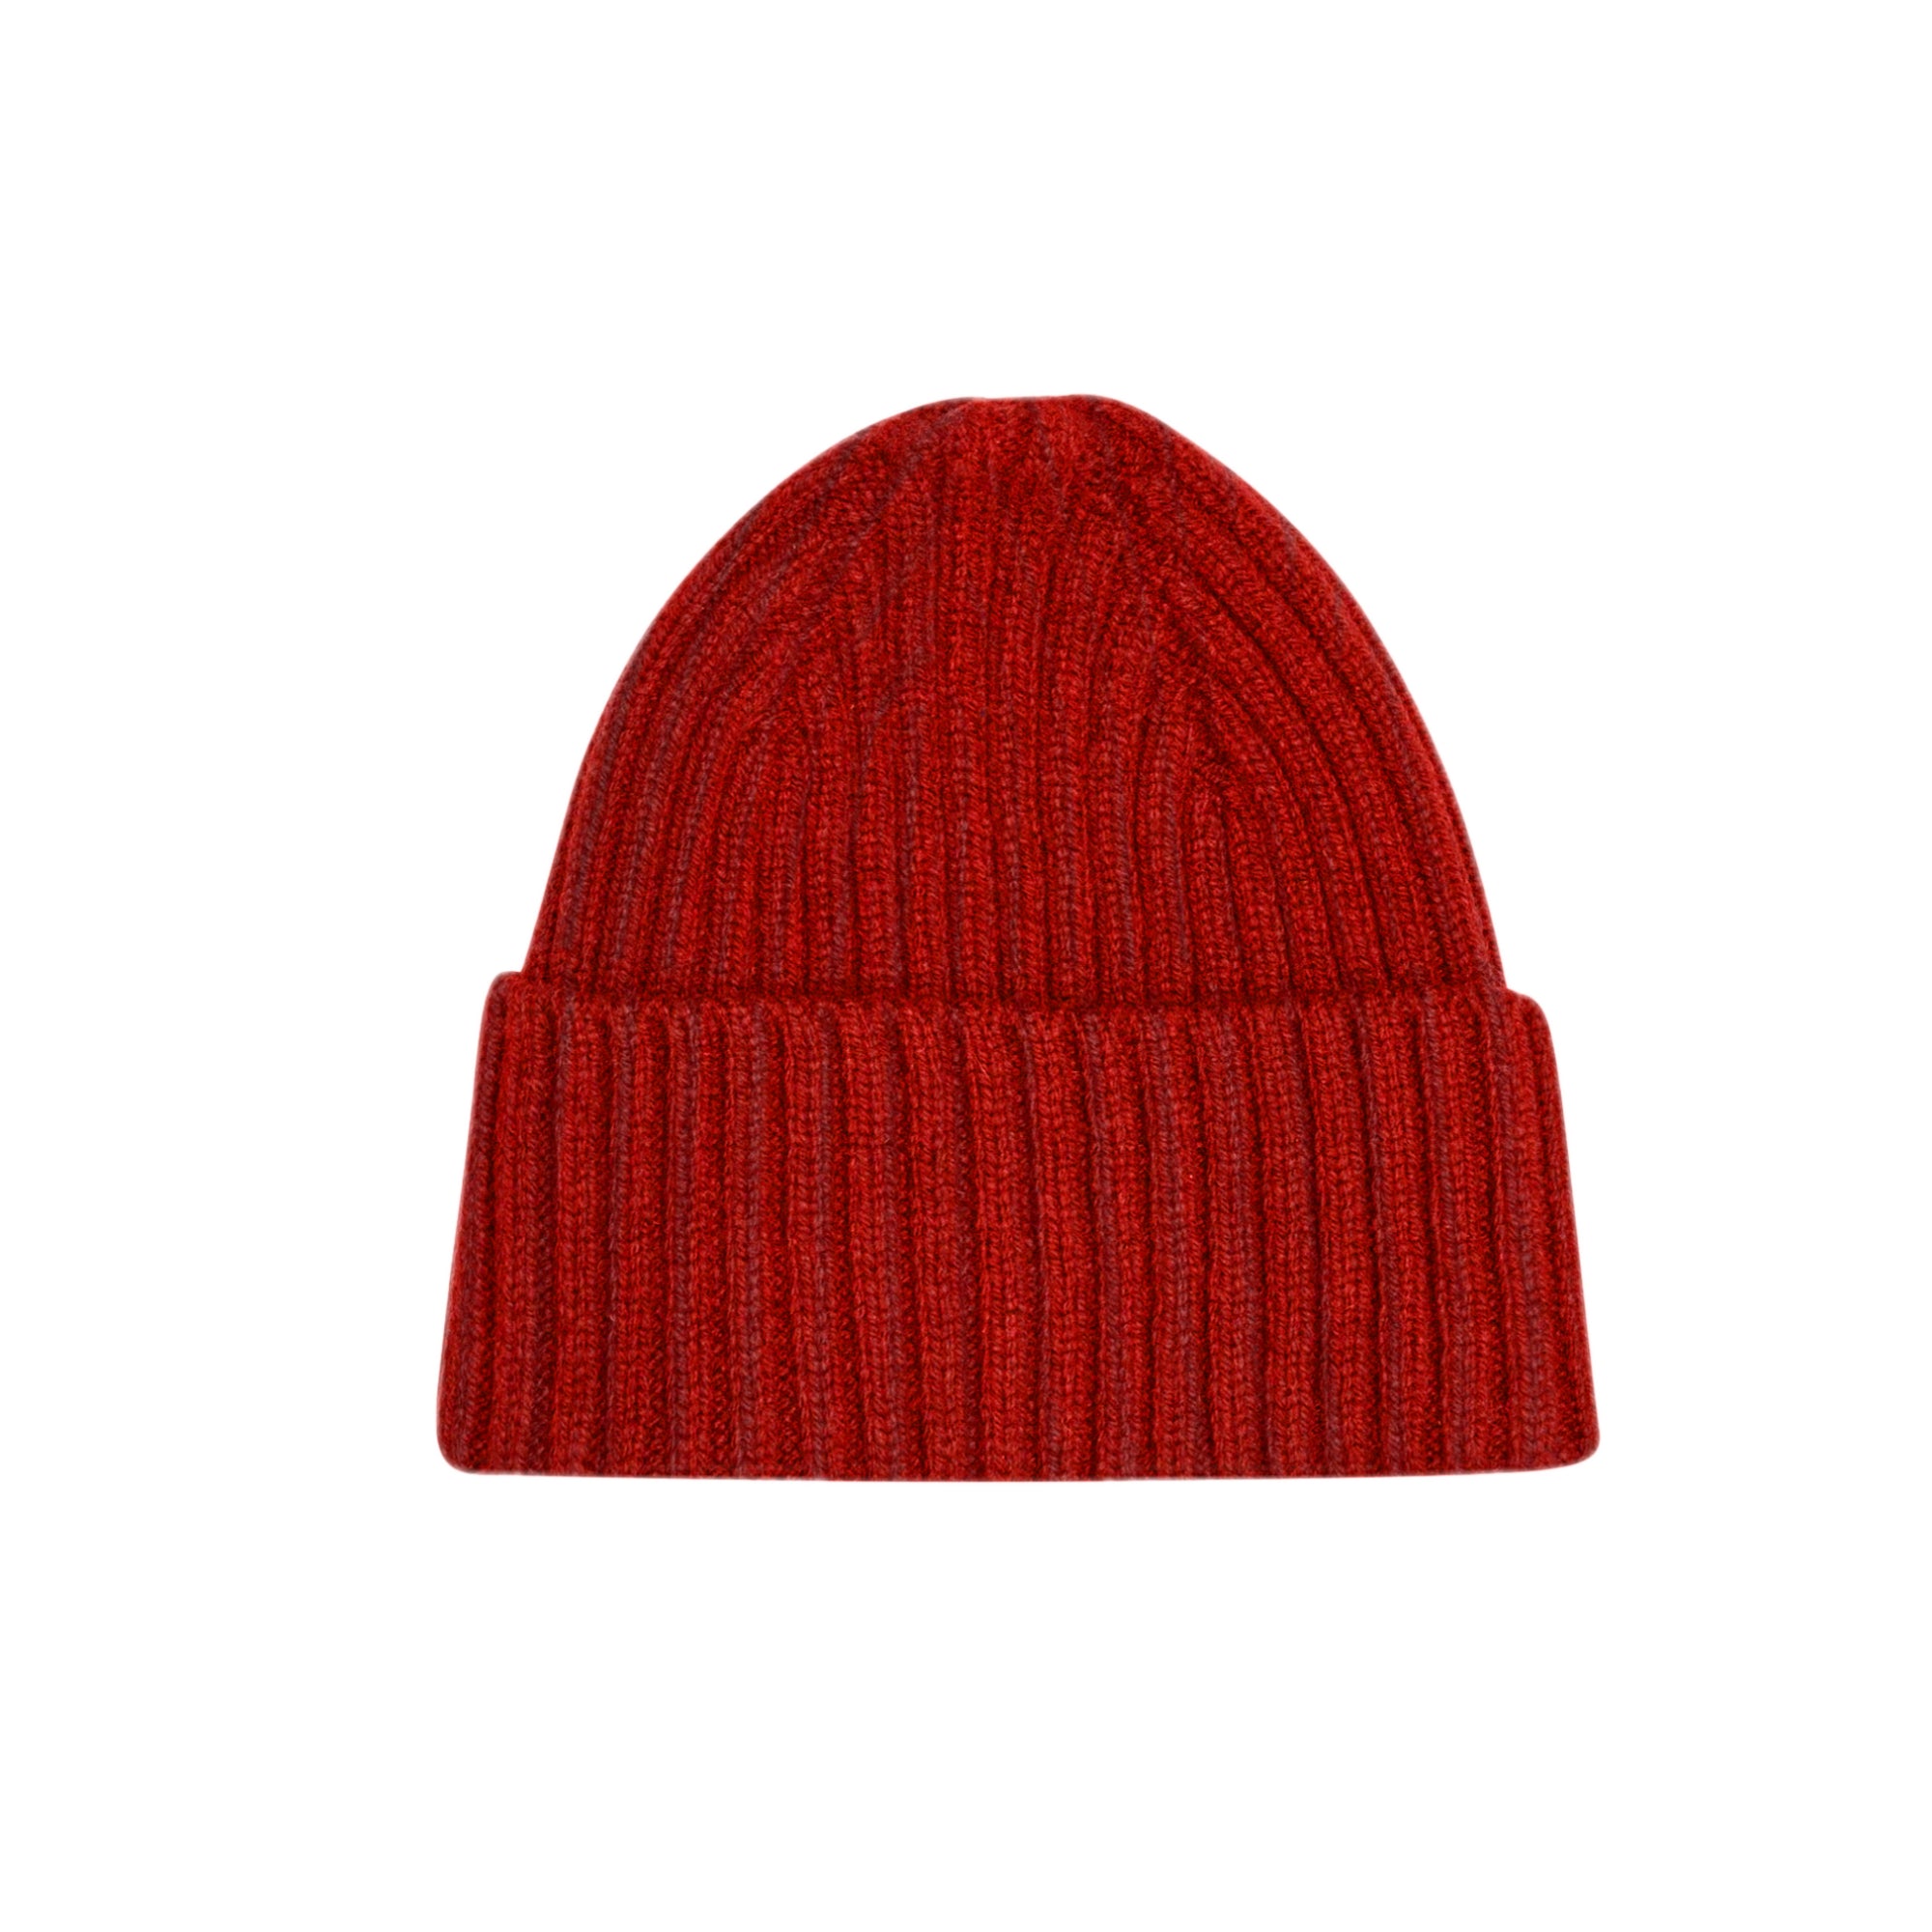 Malloch's Red Wilton Lambswool Hat